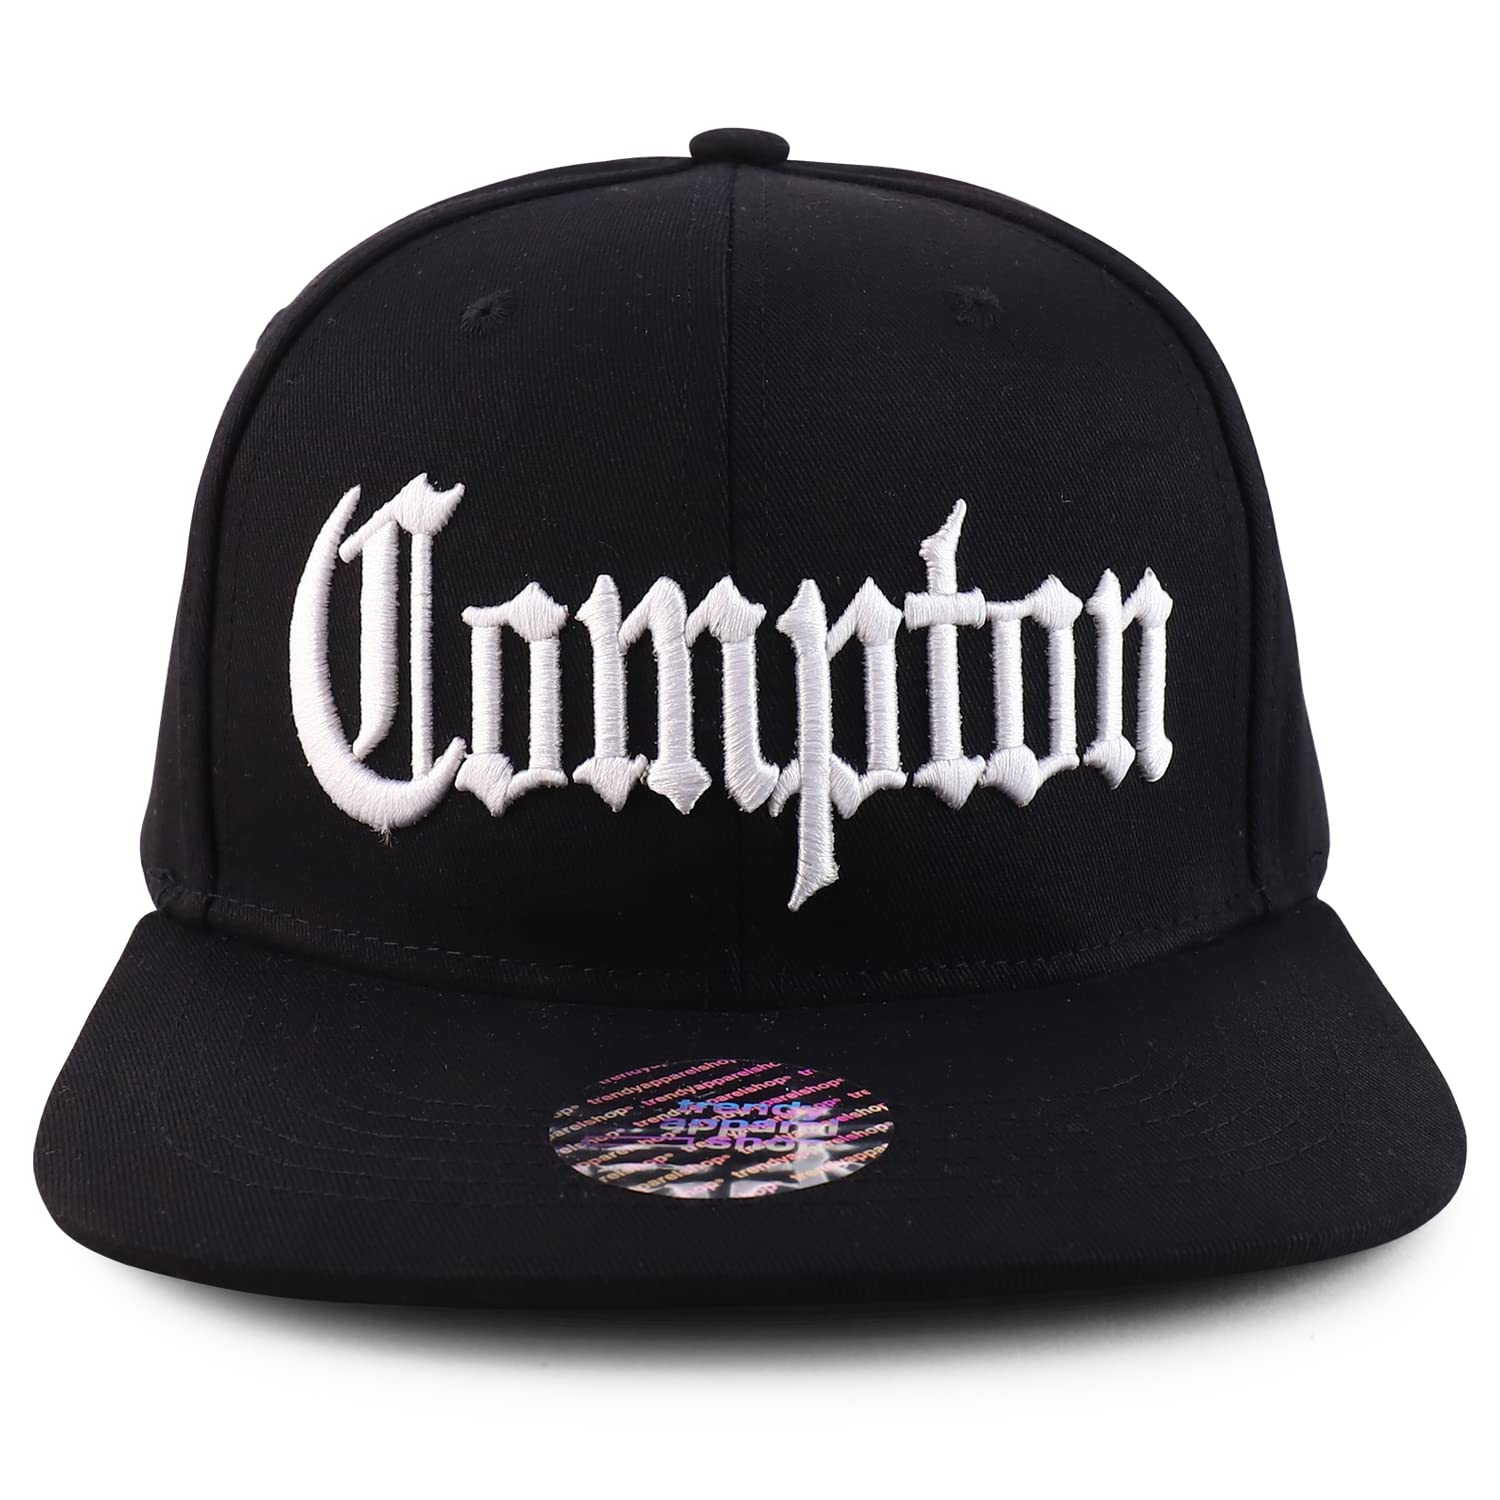 Trendy Apparel Shop Oversize XXL Old English Compton Embroidered Flatbill Snapback Baseball Cap